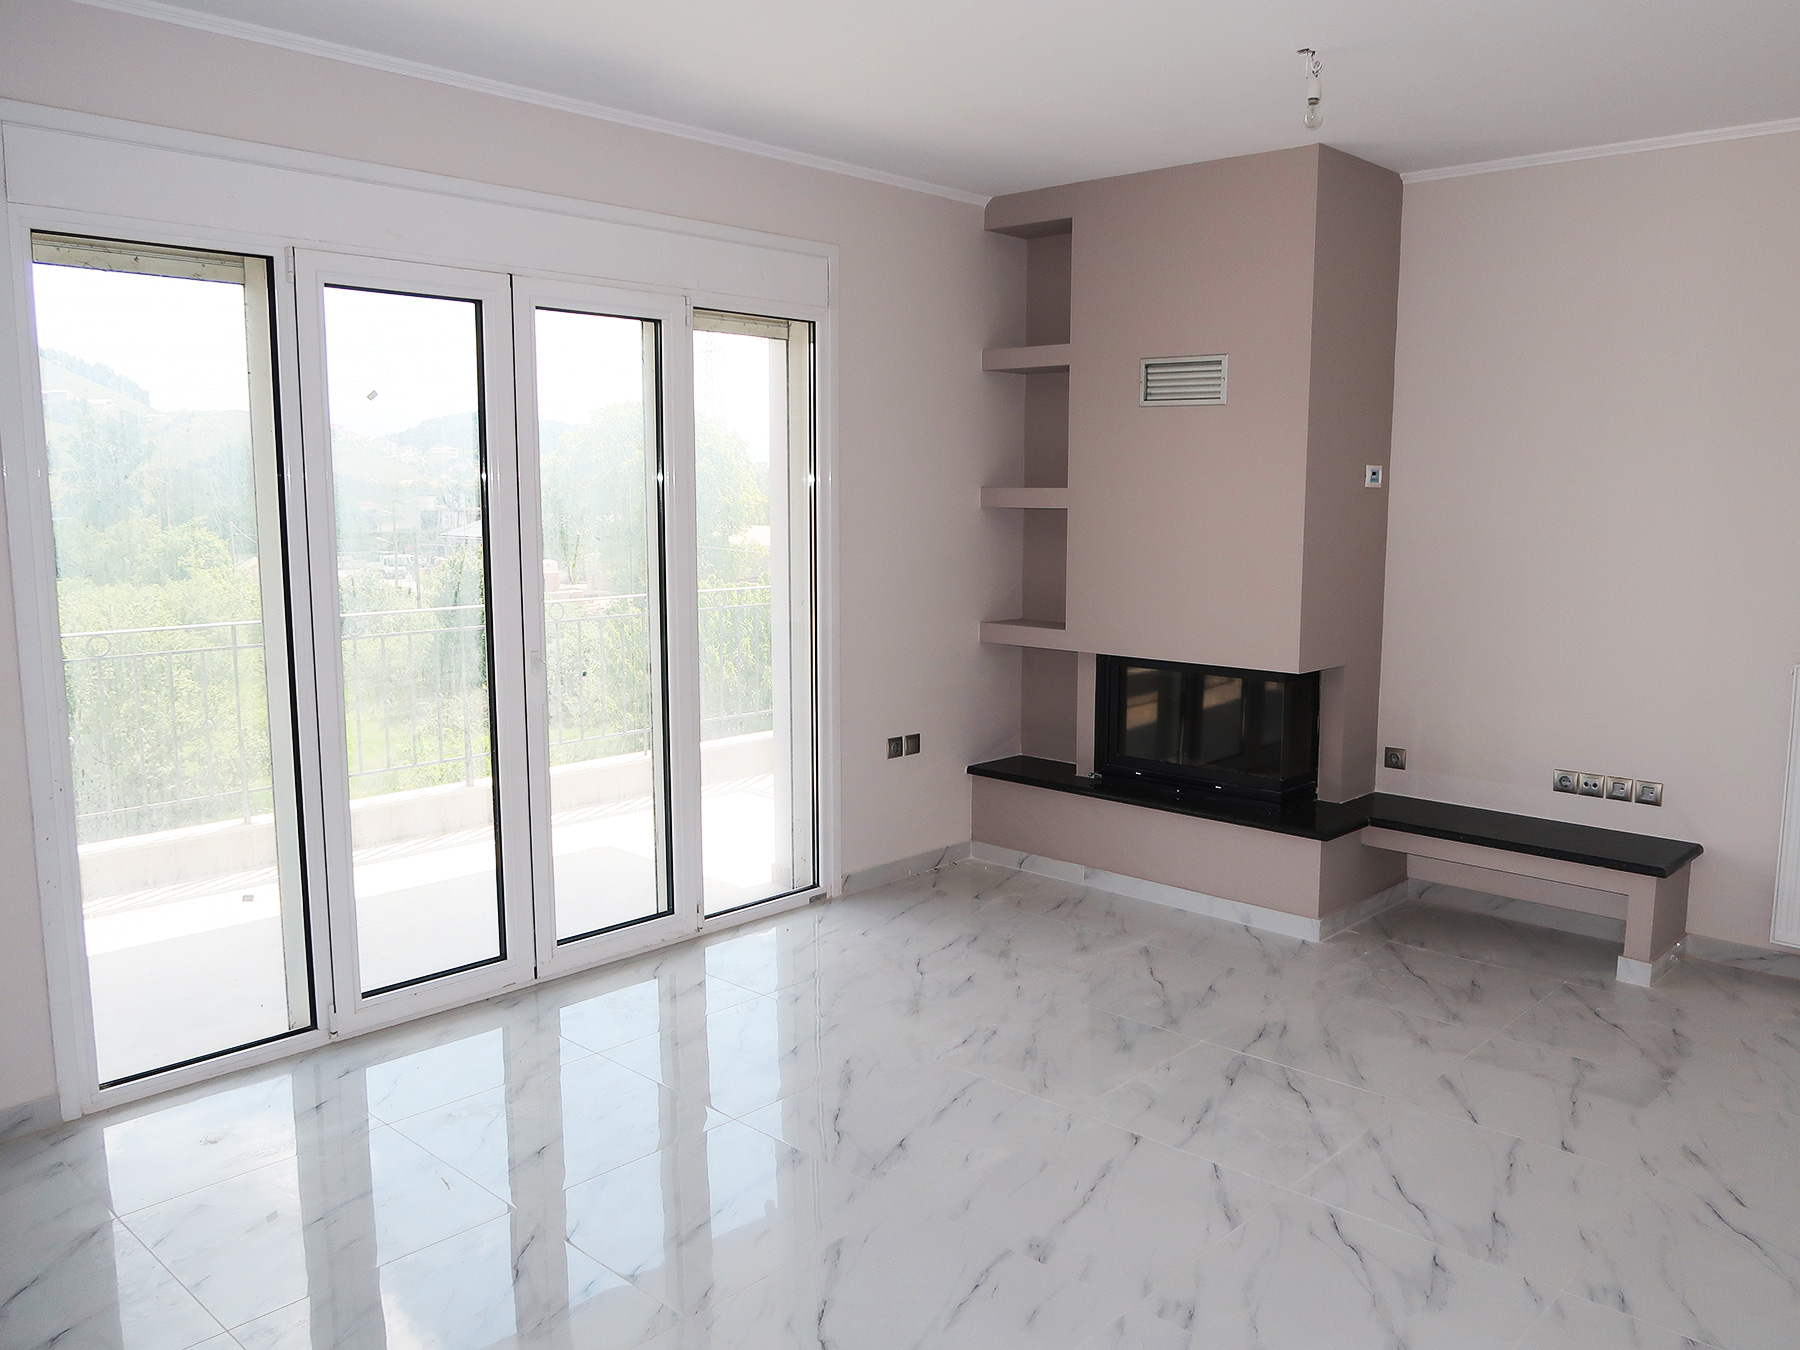 For sale a bright 3 bedroom apartment of 96sqm. 2nd floor near Vlachostrata in Stavraki Ioannina